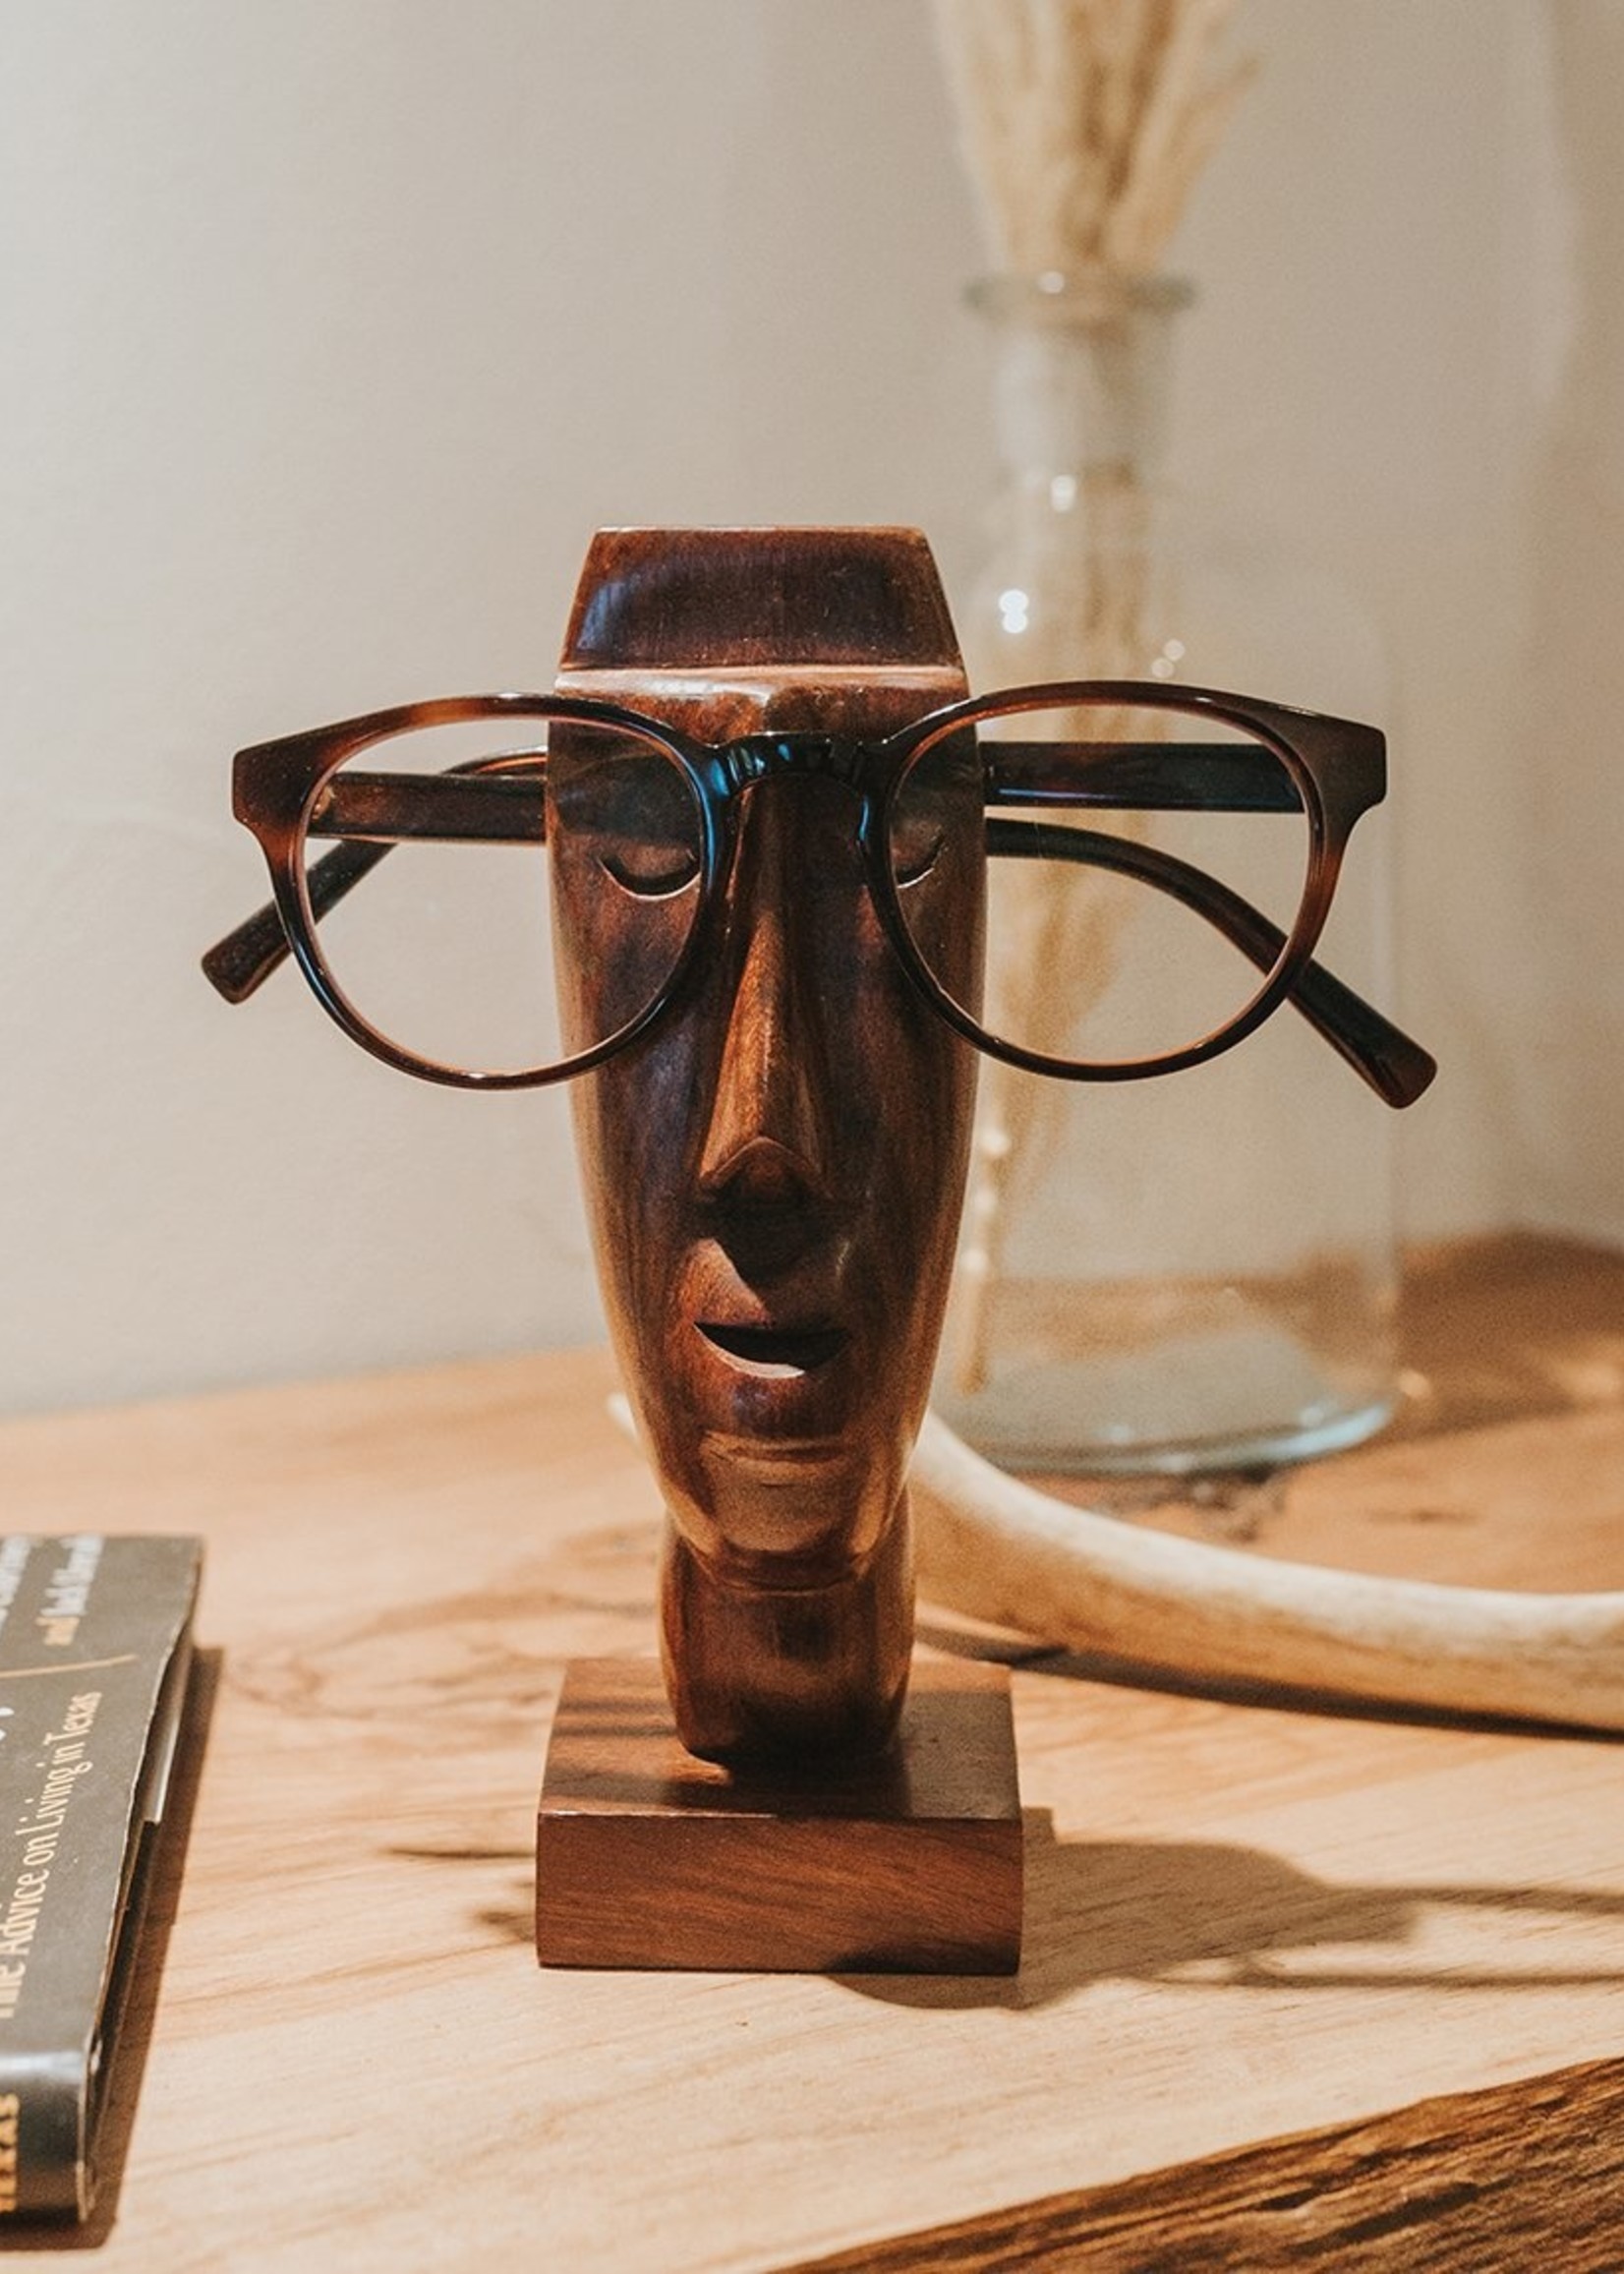 Matr Boomie - Rapa Nui Eyeglass Holder